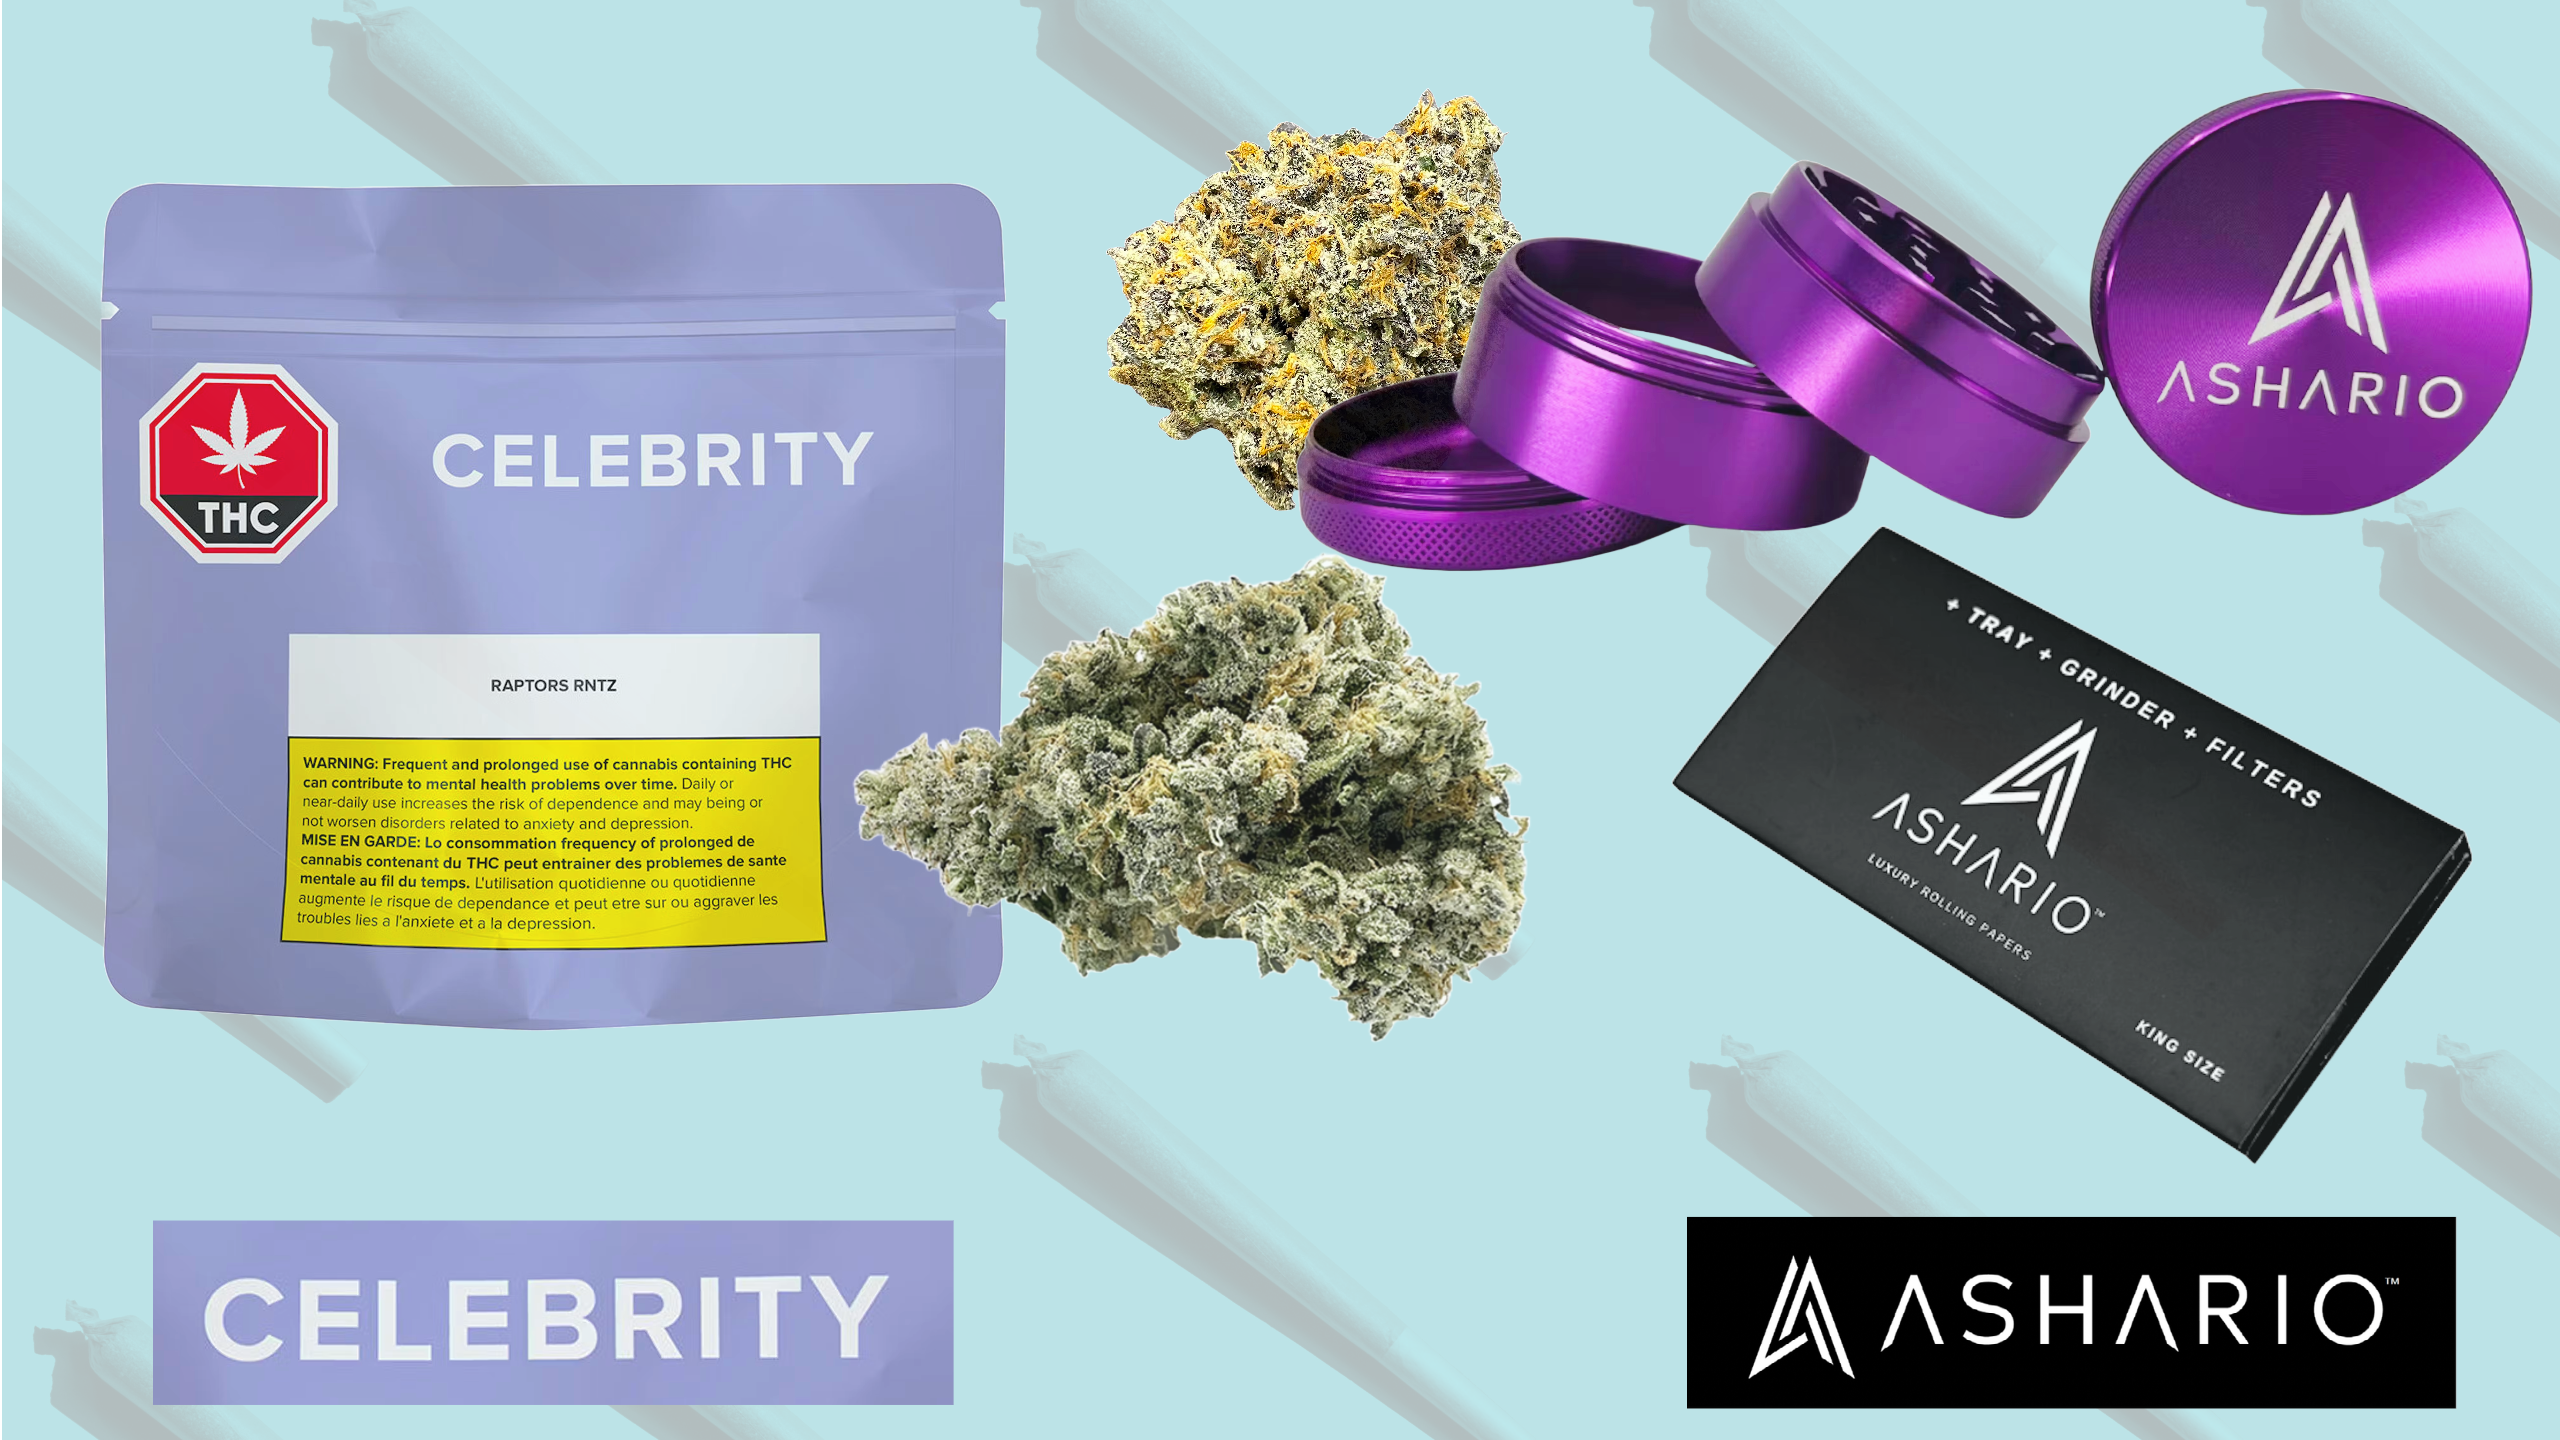 Ashario Cannabis Brand Spotlight: Celebrity – The Ultimate Craft Flower Experience